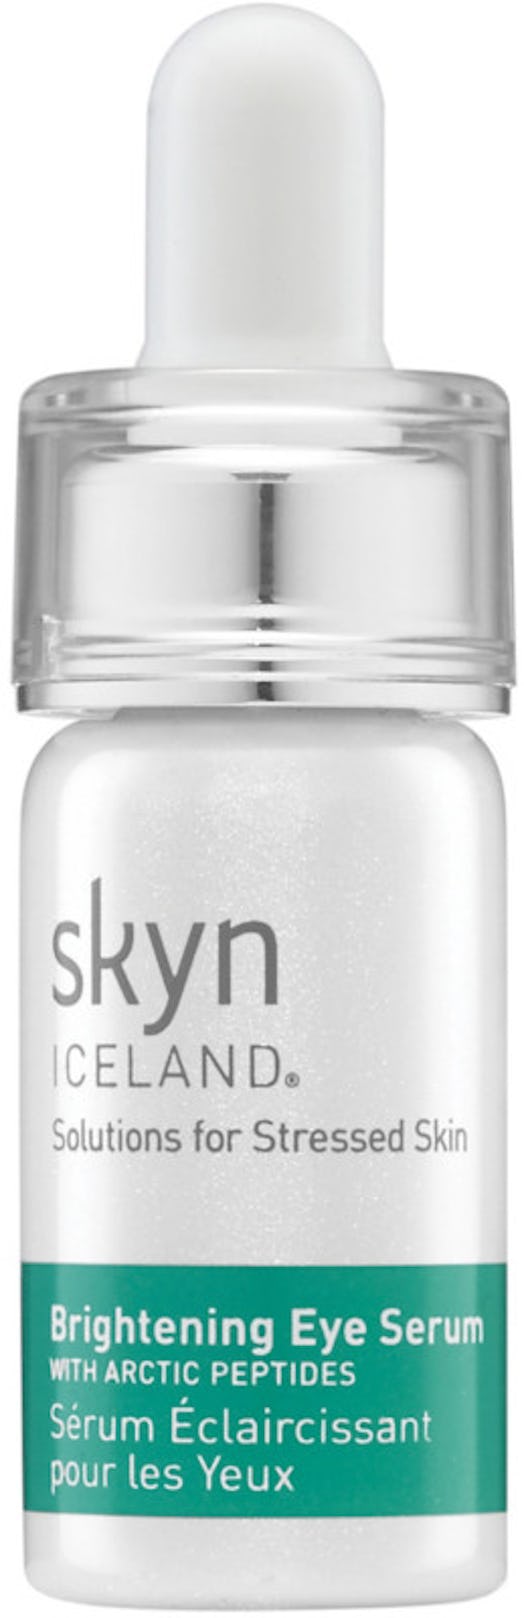 Image result for skyn iceland brightening eye serum